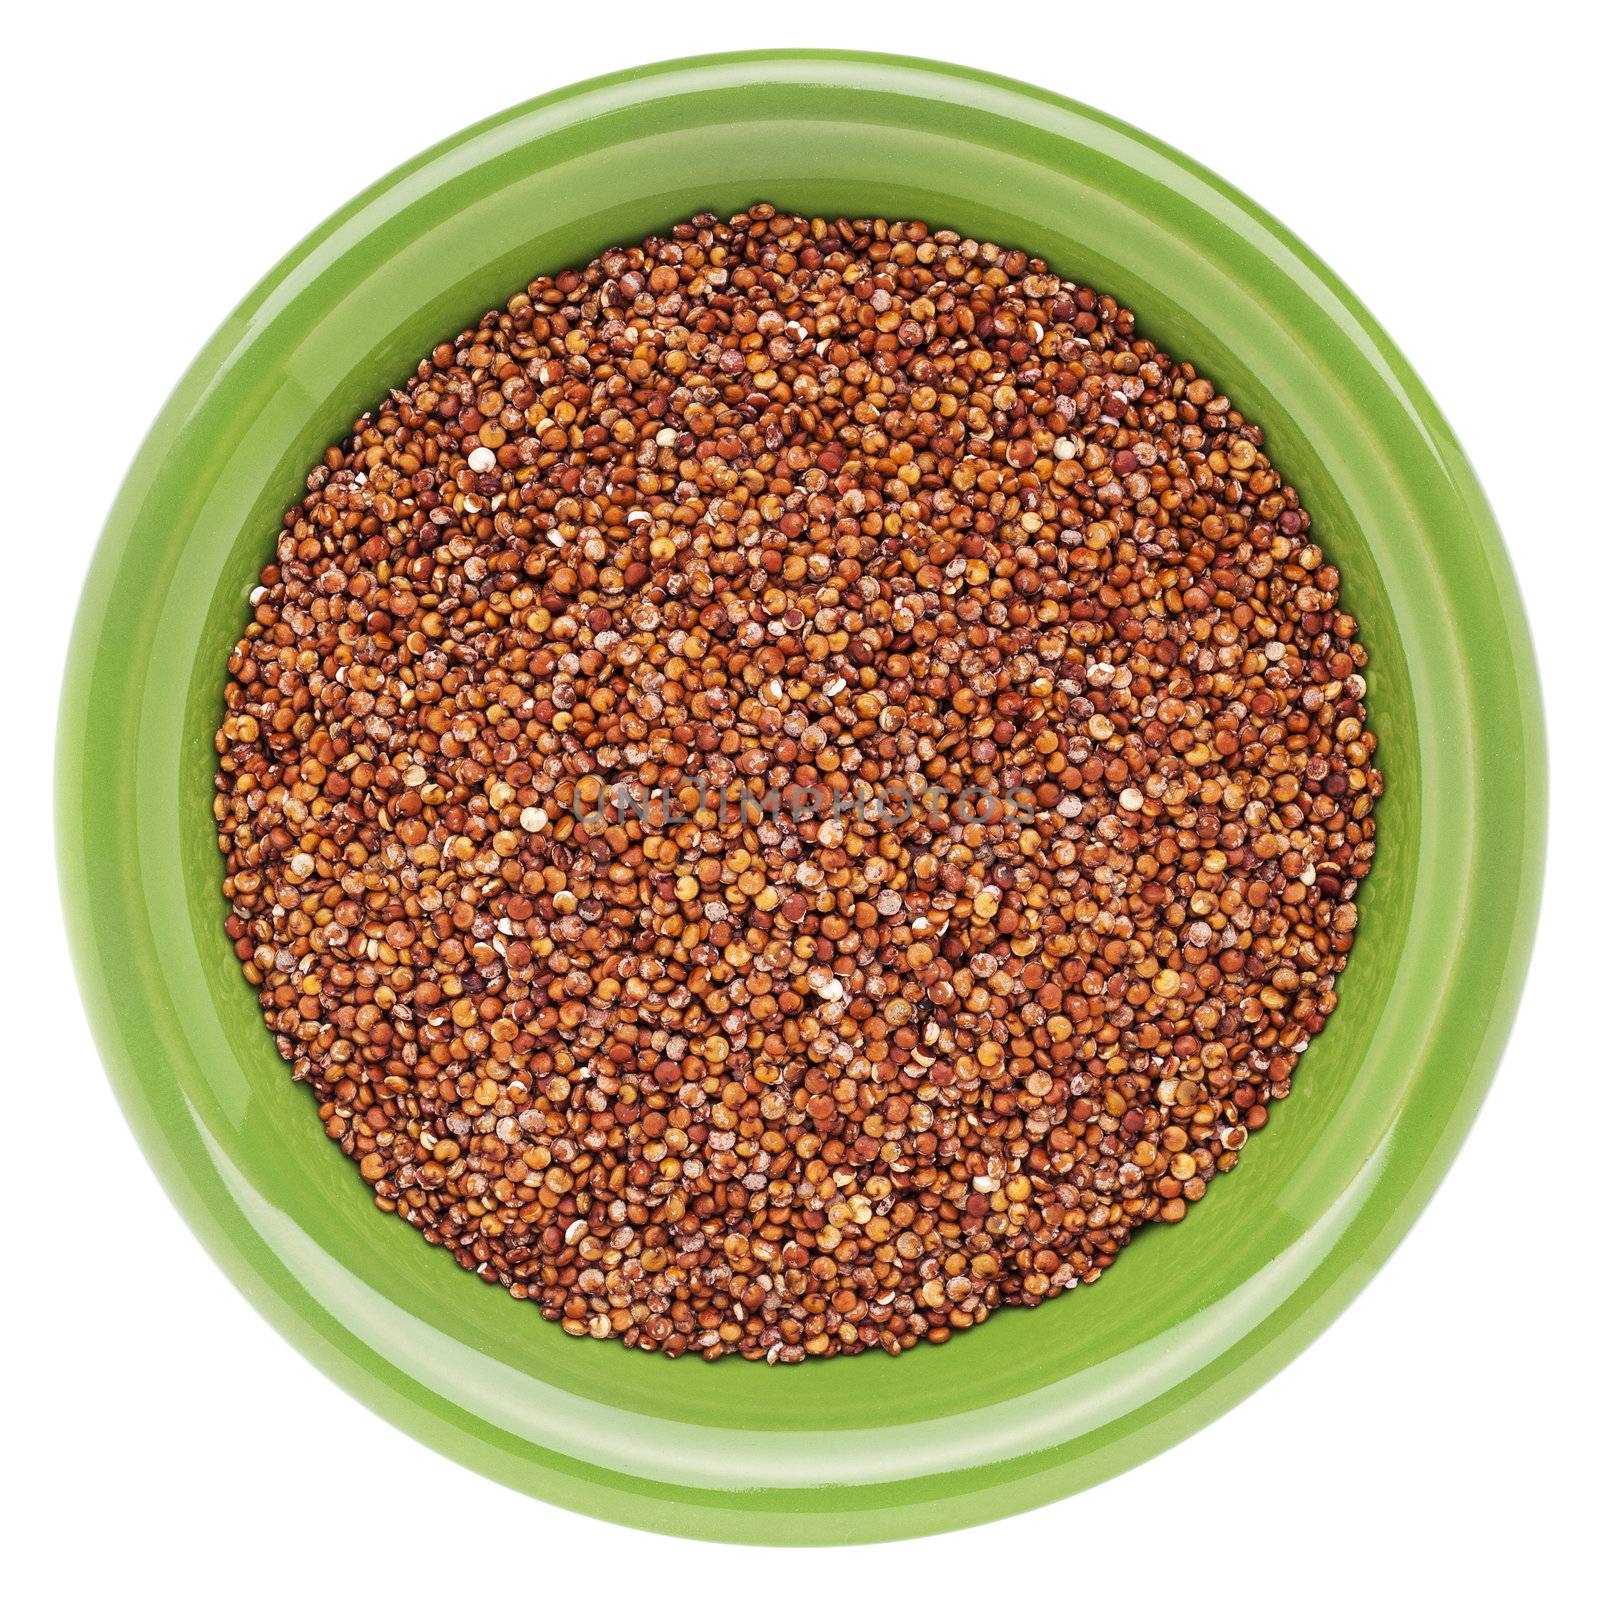 ceramic bowl of red quinoa grain isolated on white